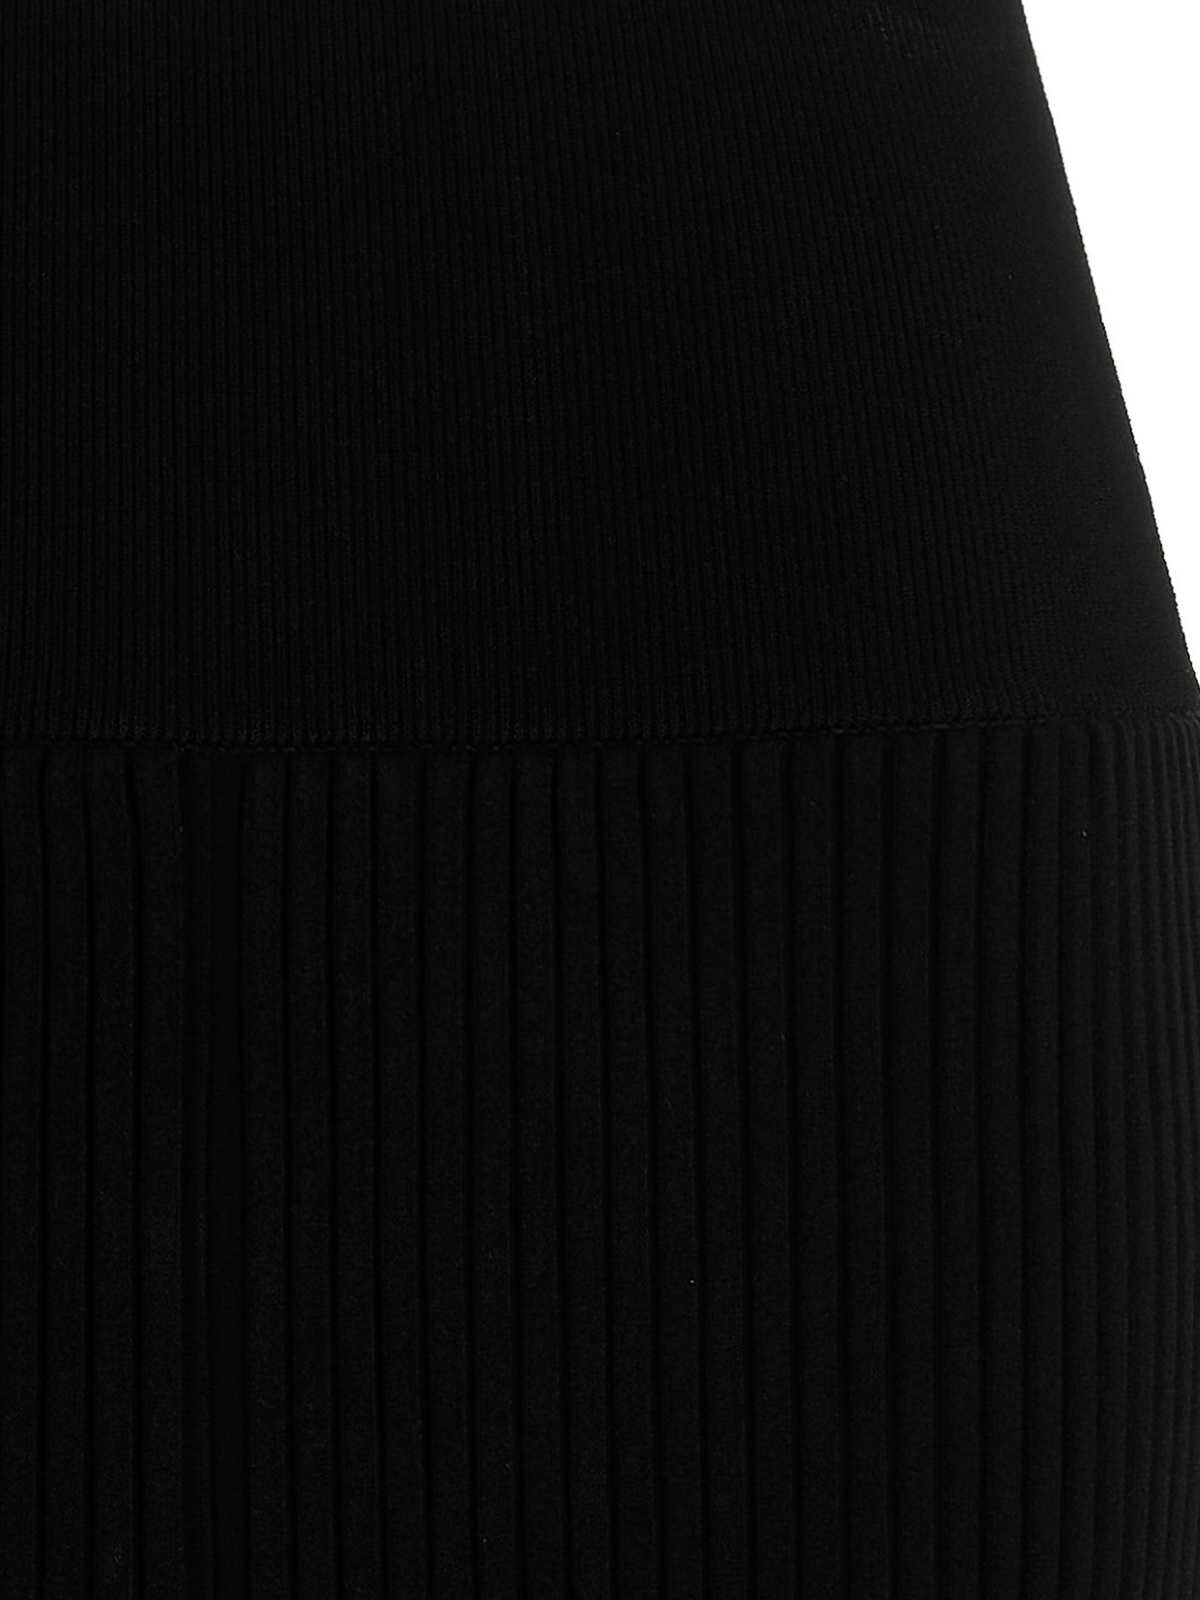 Long skirts Tory Burch - Ribbed knit skirt - 142343001 